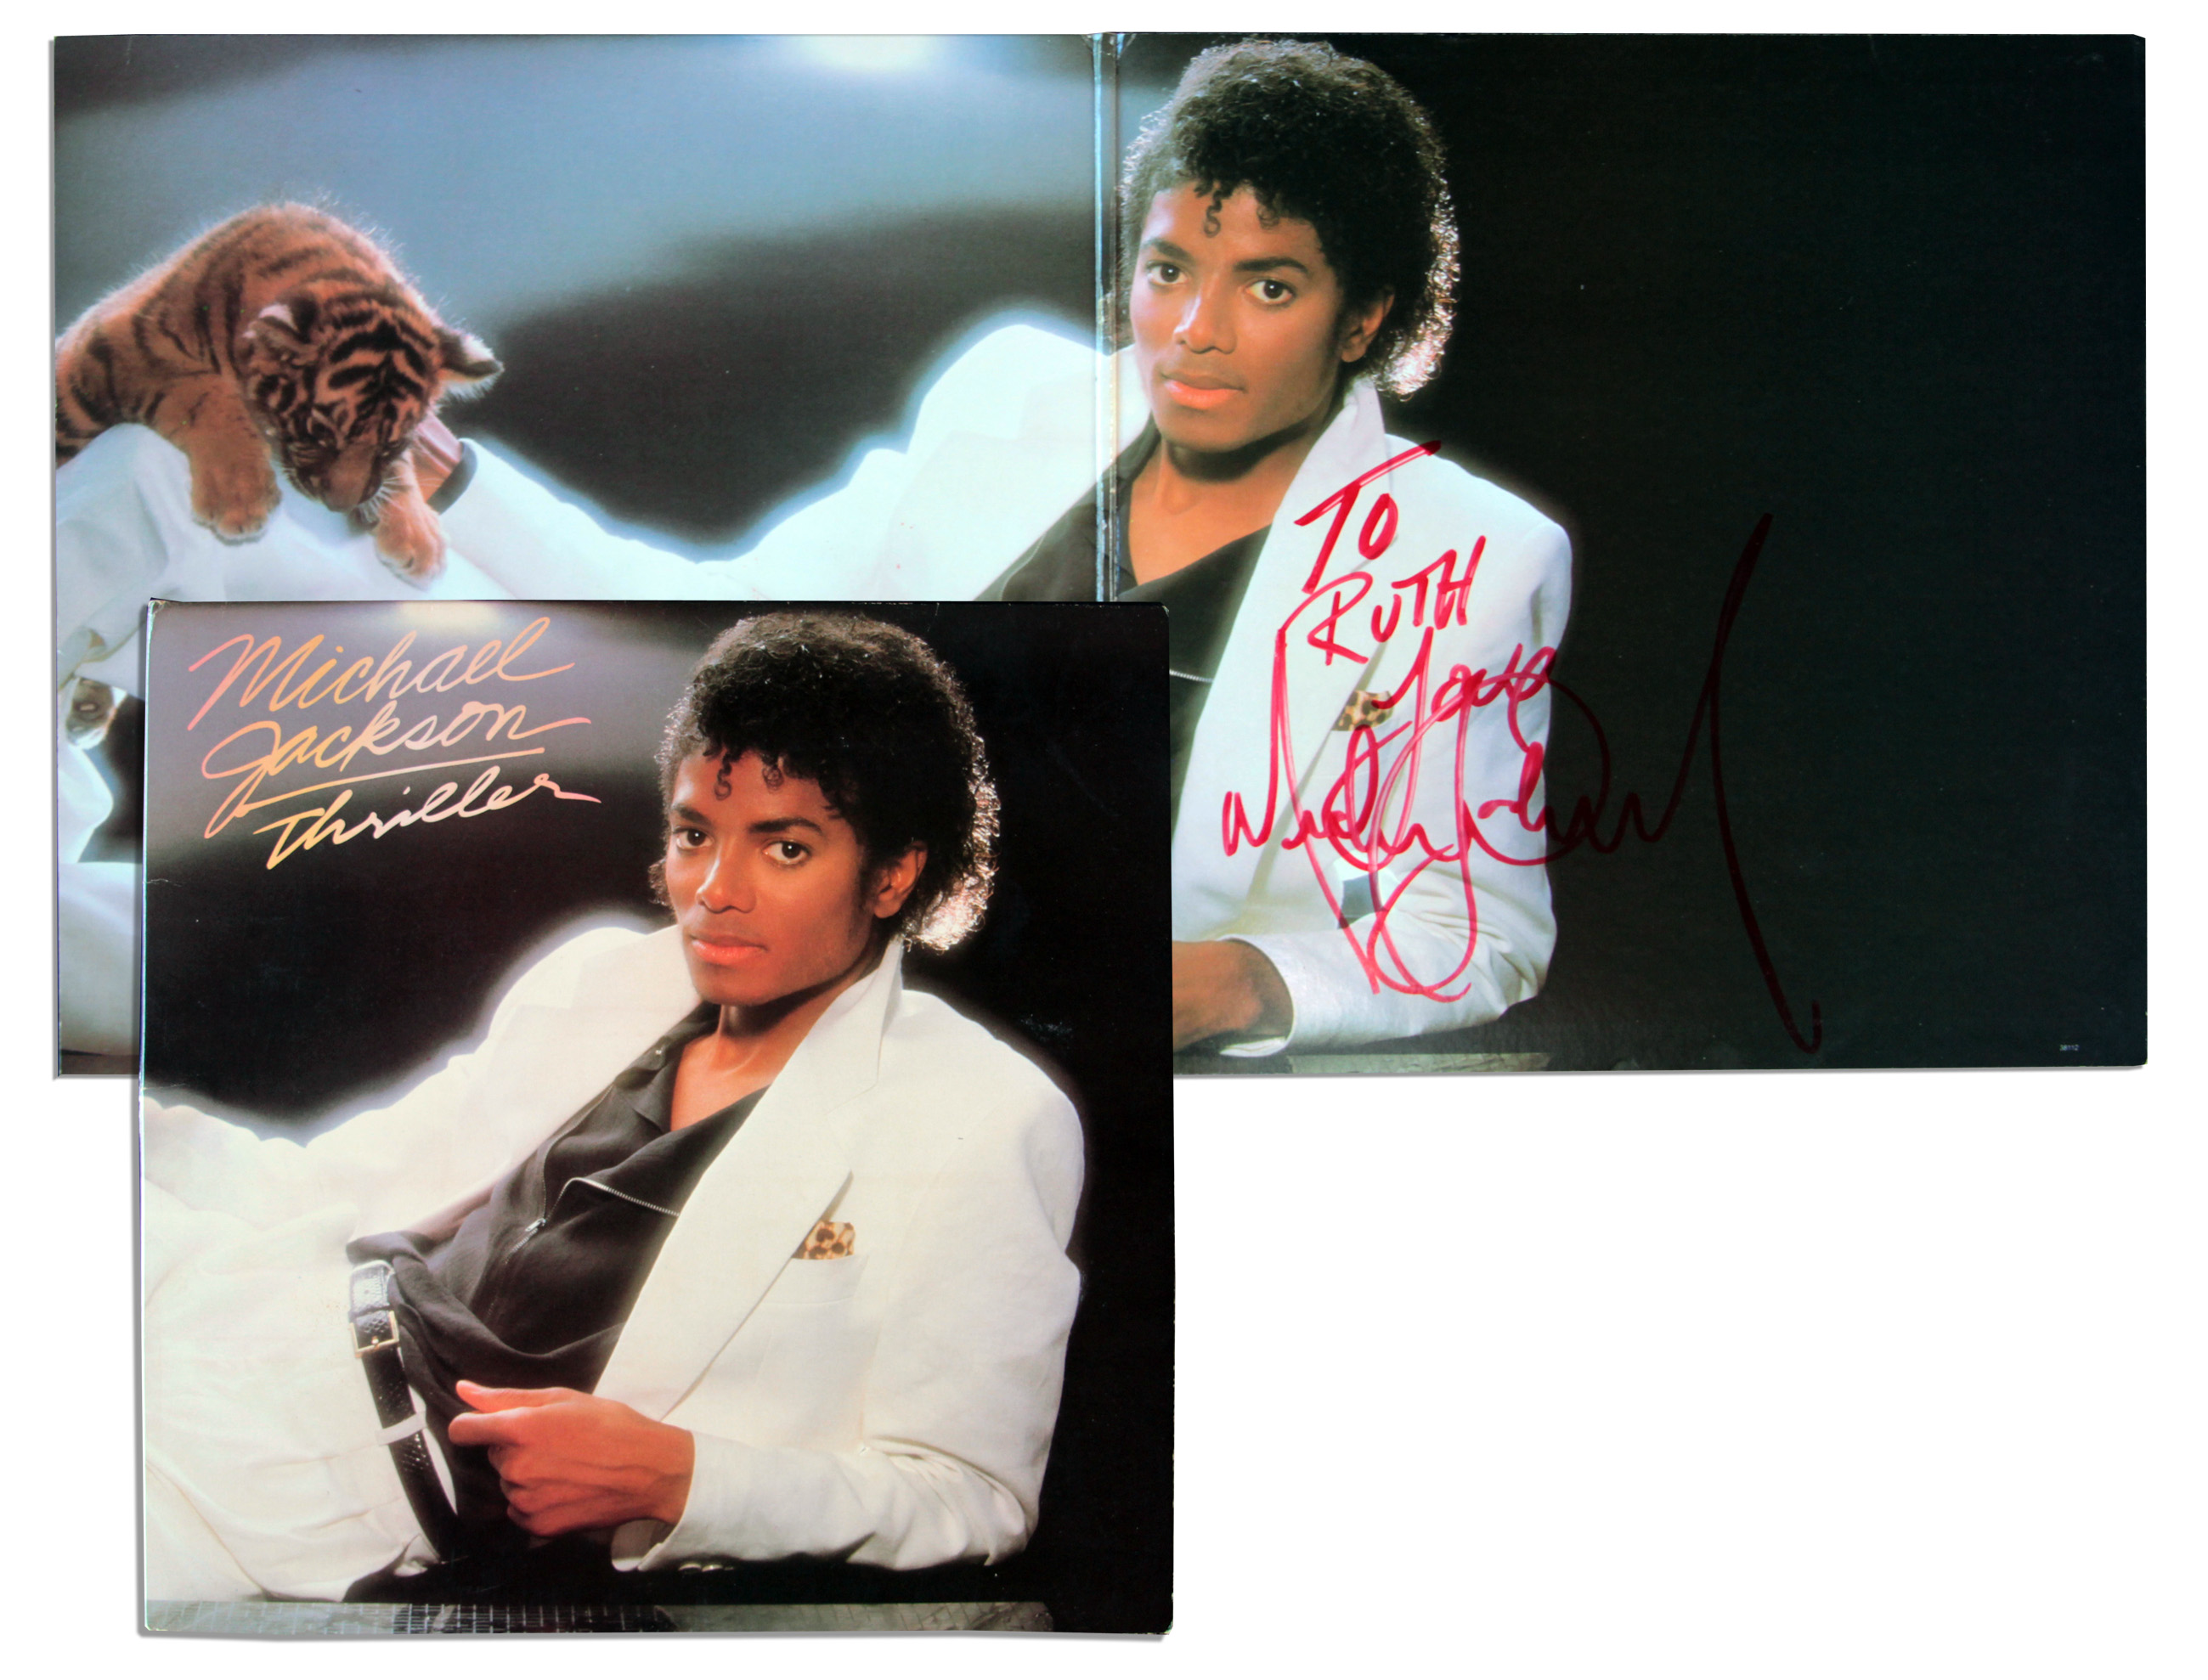 Michael Jackson Foto & Thriller CD SIGNED Präsentation Display gerahmt